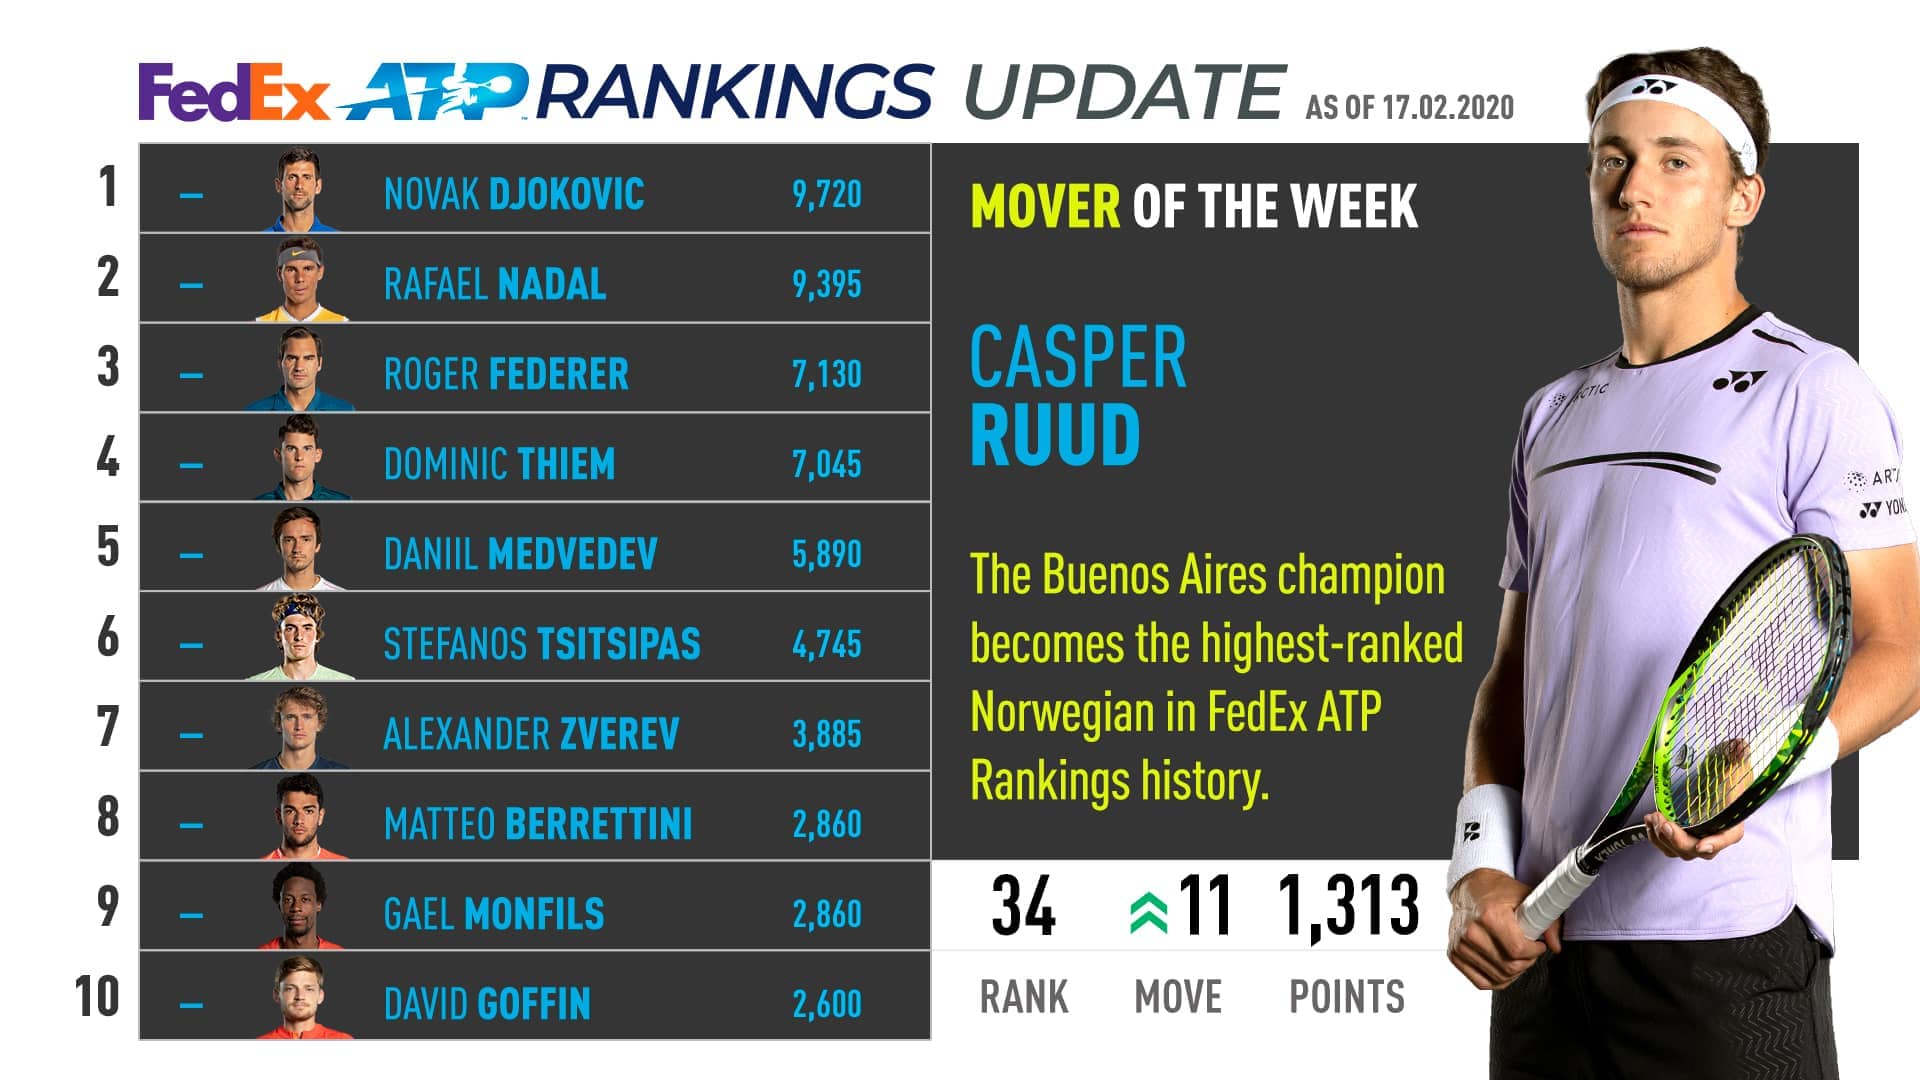 Casper ruud ranking